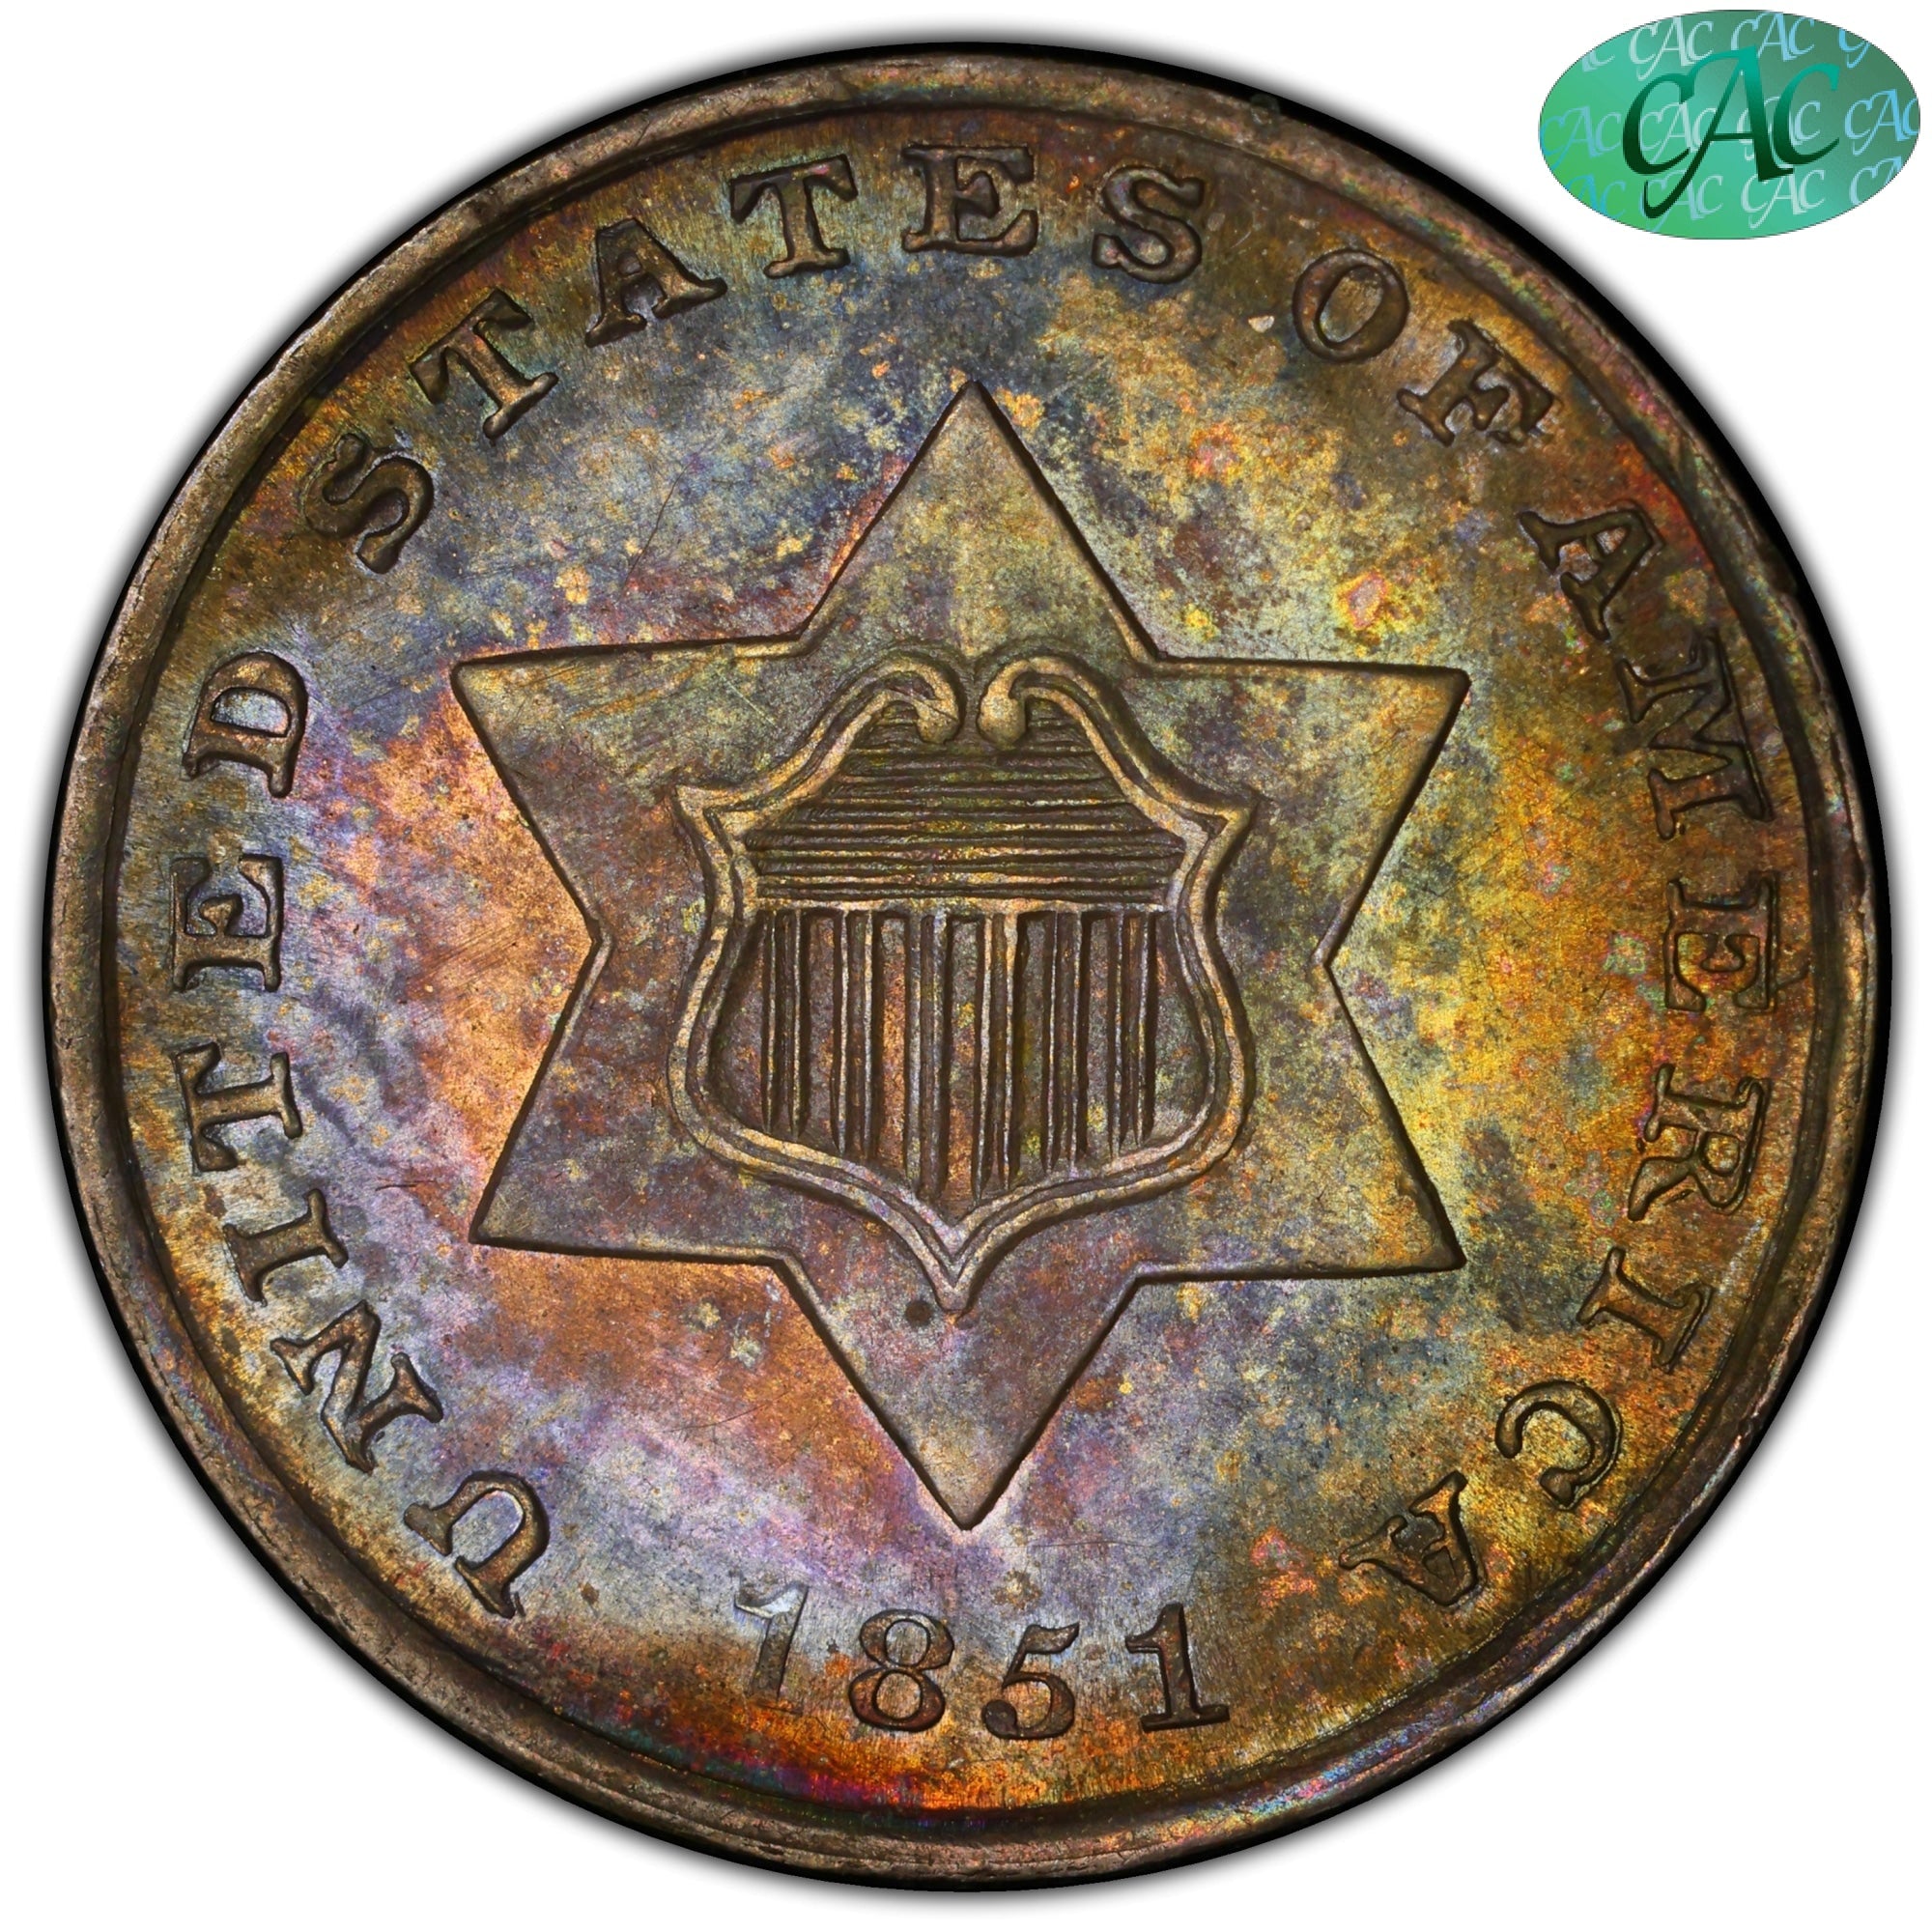 1851 3CS MS64 PCGS CAC - Paradime Coins | PCGS NGC CACG CAC Rare US Numismatic Coins For Sale